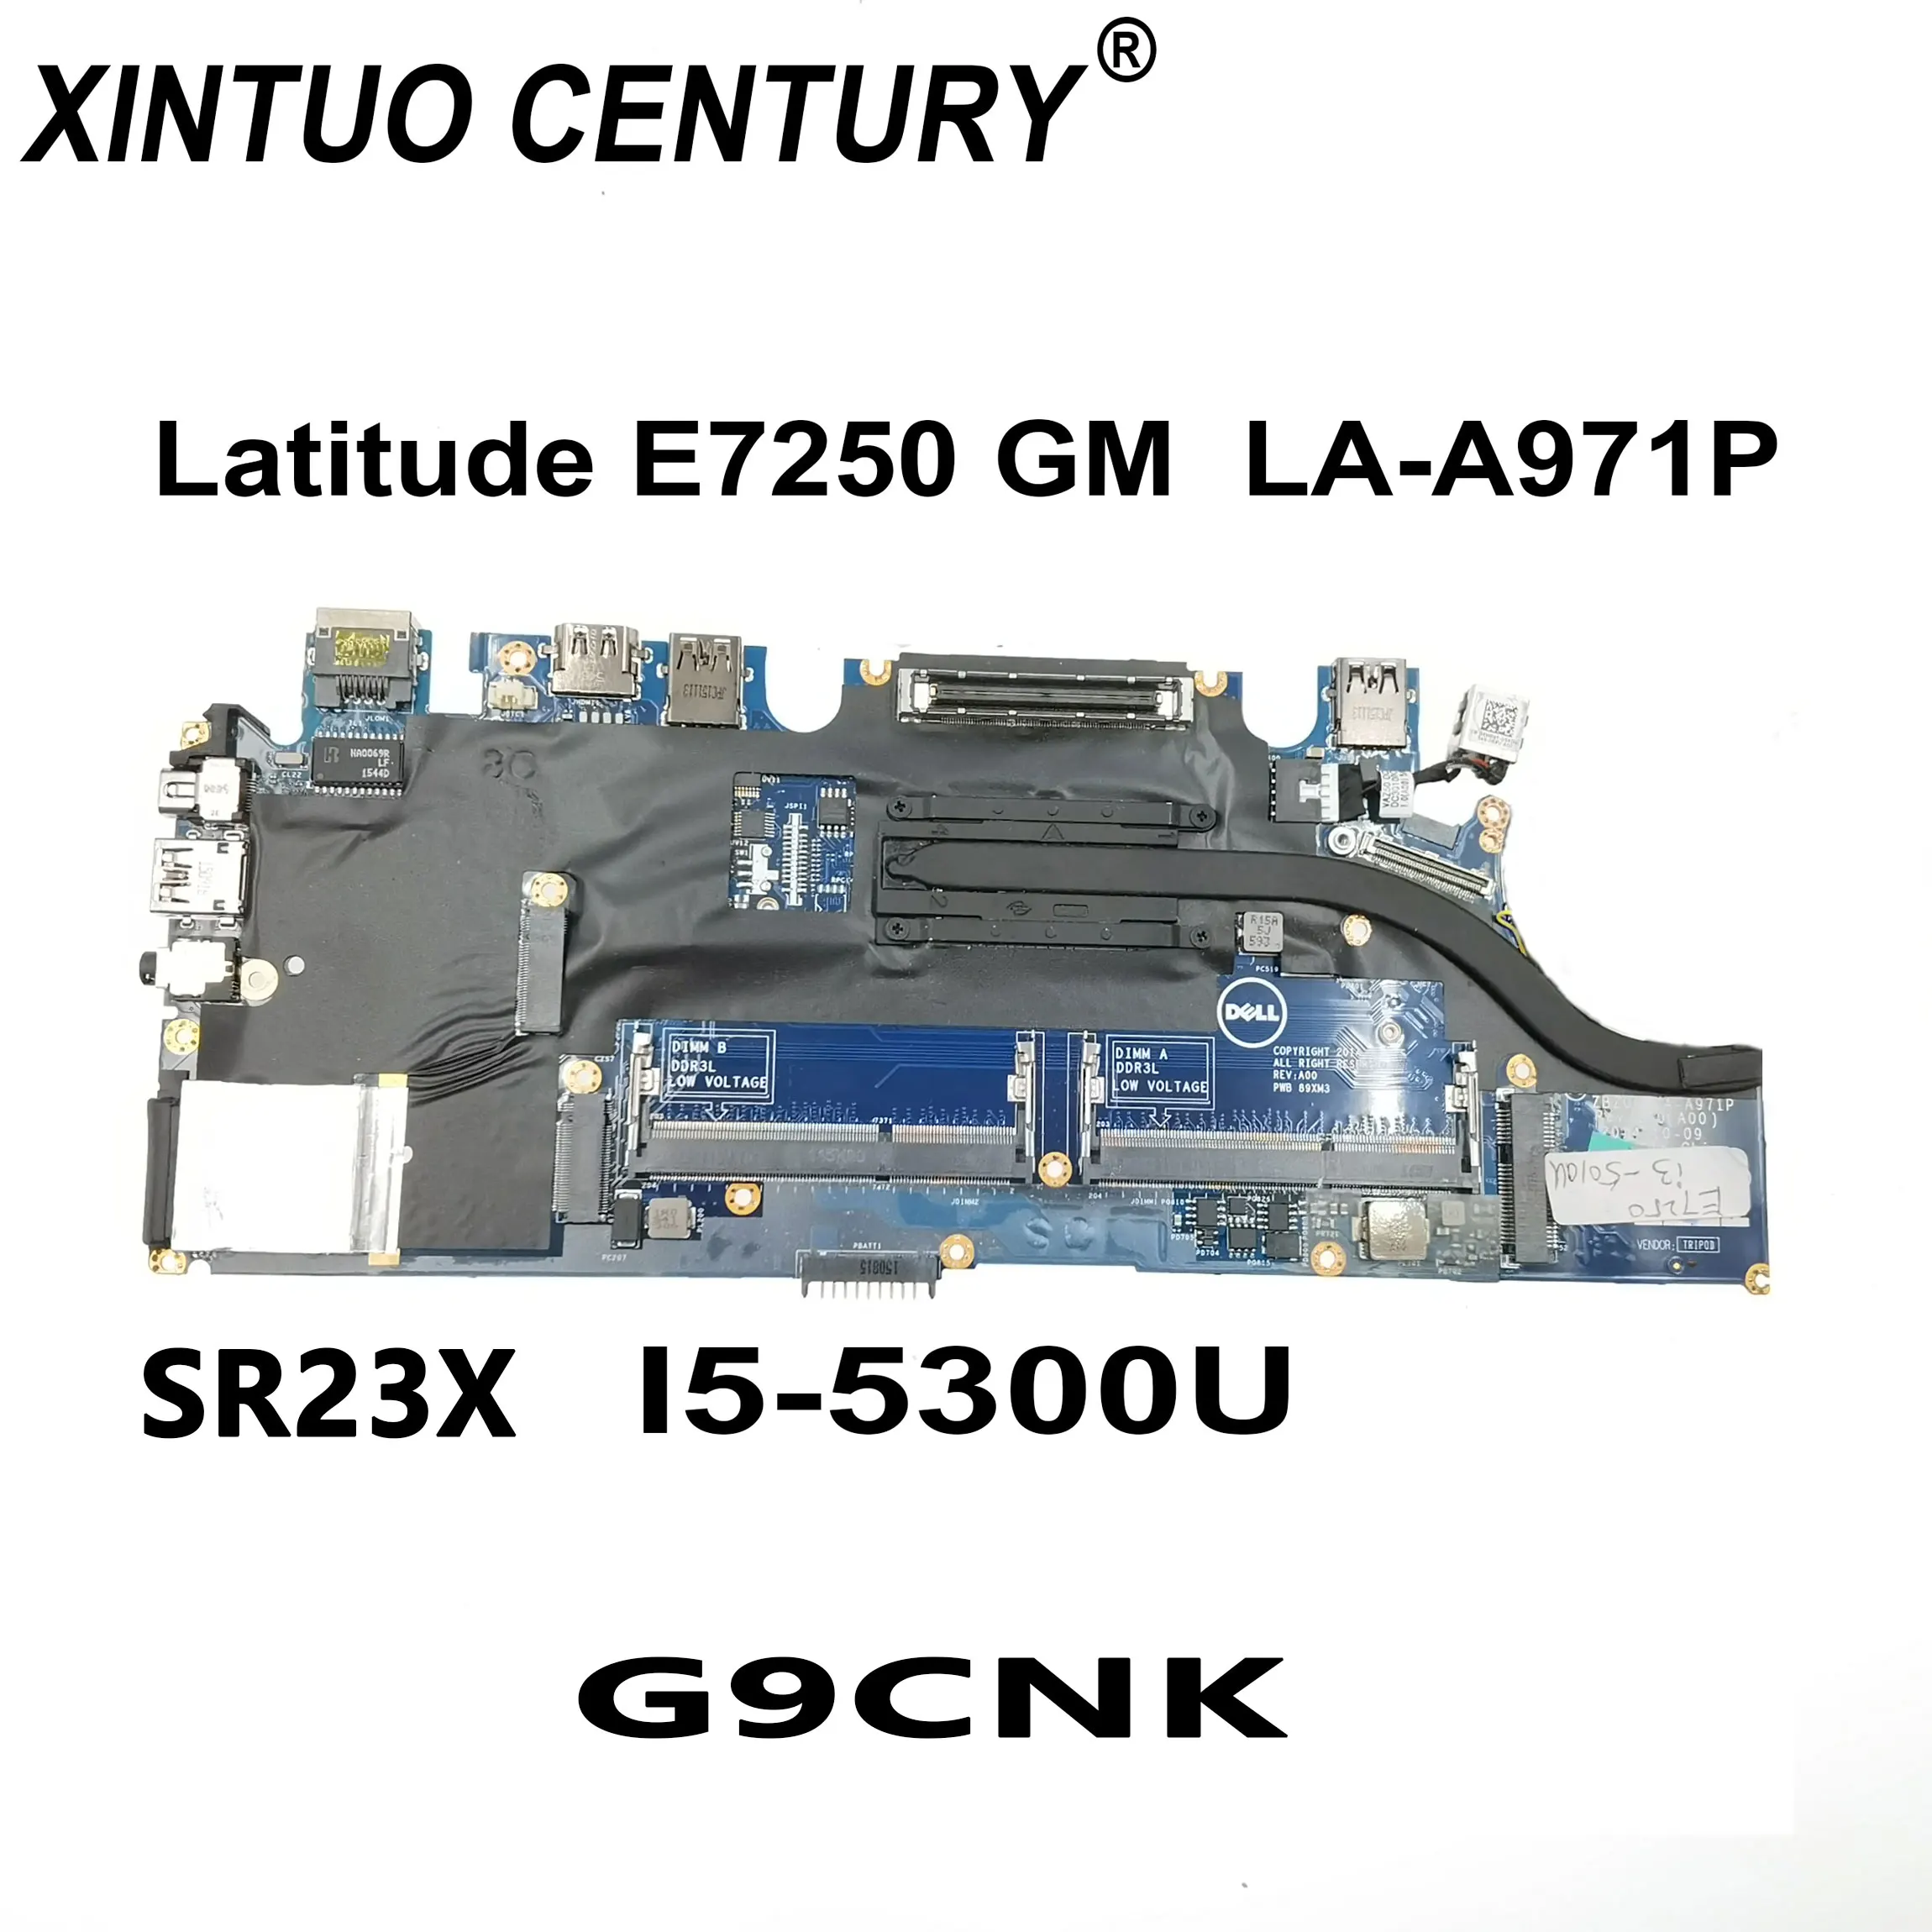 

CN-0G9CNK 0G9CNK для Dell Latitude 7250 E7250 материнская плата для ноутбука Combo ZBZ00 LA-A971P с SR23X I5-5300U DDR3 100%